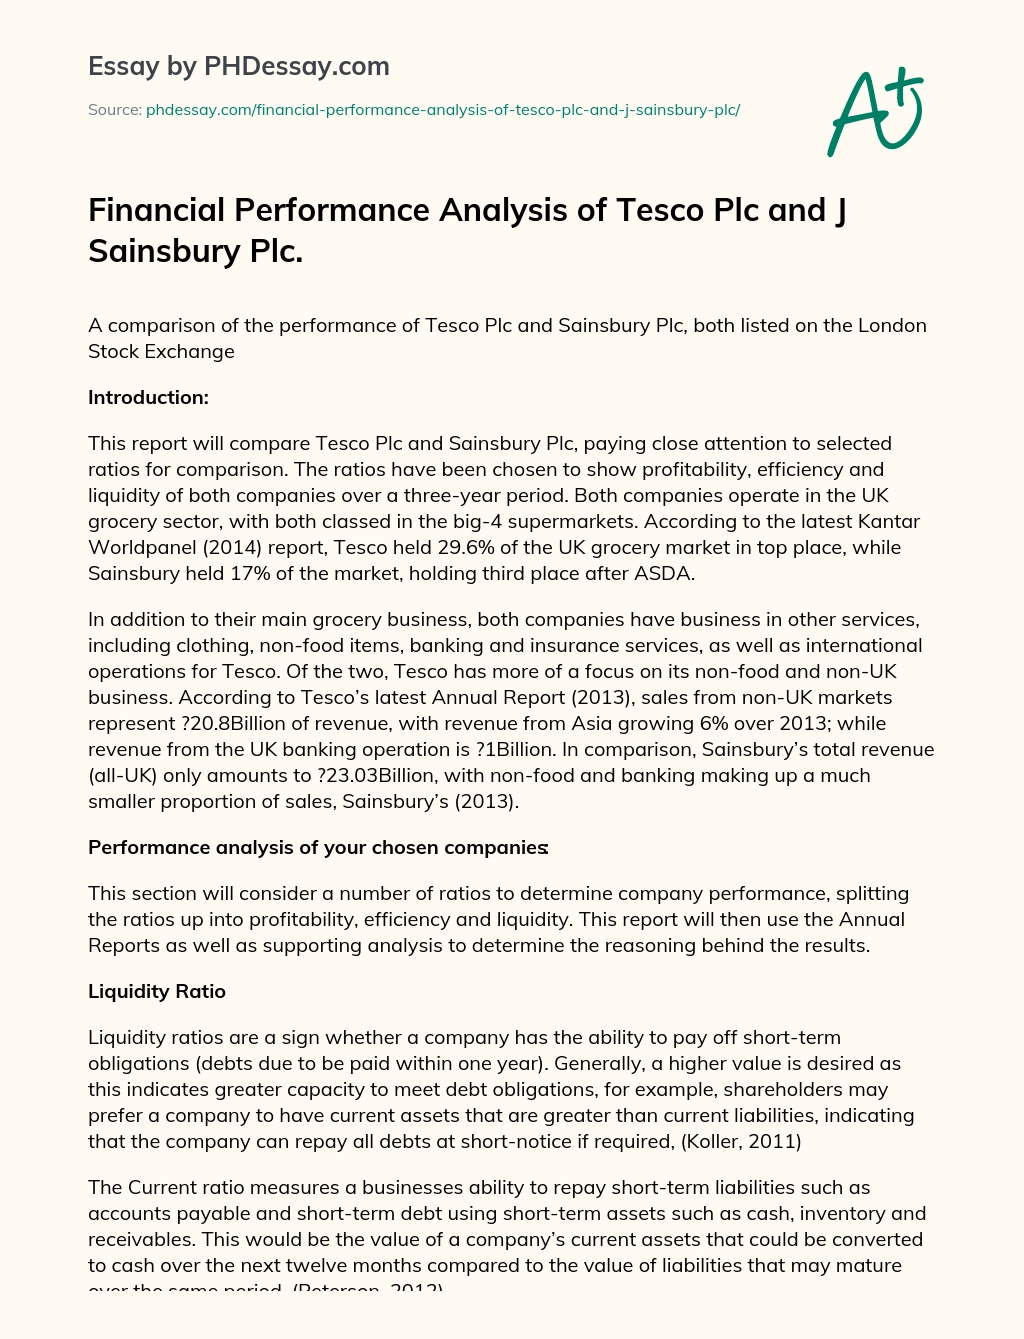 Financial Performance Analysis of Tesco Plc and J Sainsbury Plc. essay